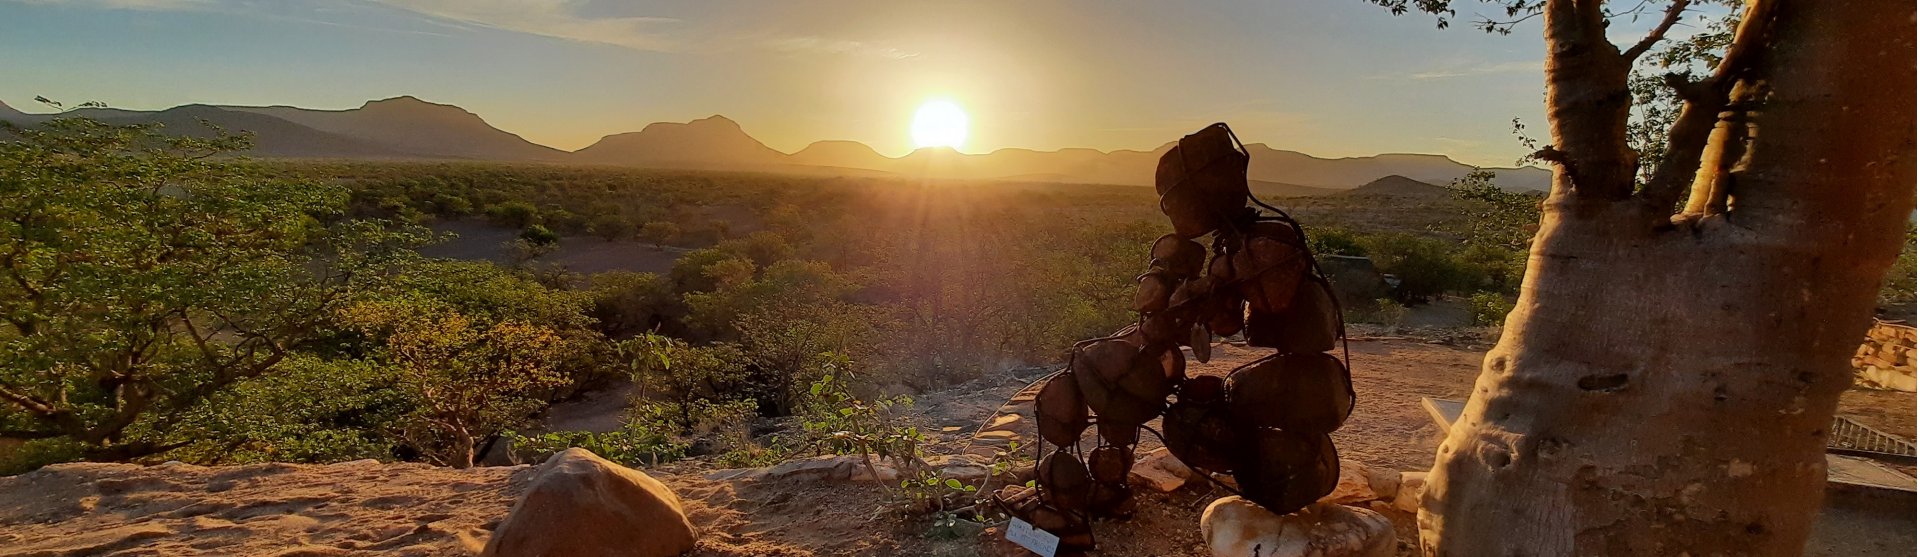 bushbundu-car-rental-windhoek-namibia-image-of-rock-sculpture-in-the-desert-faq-page-cover-image